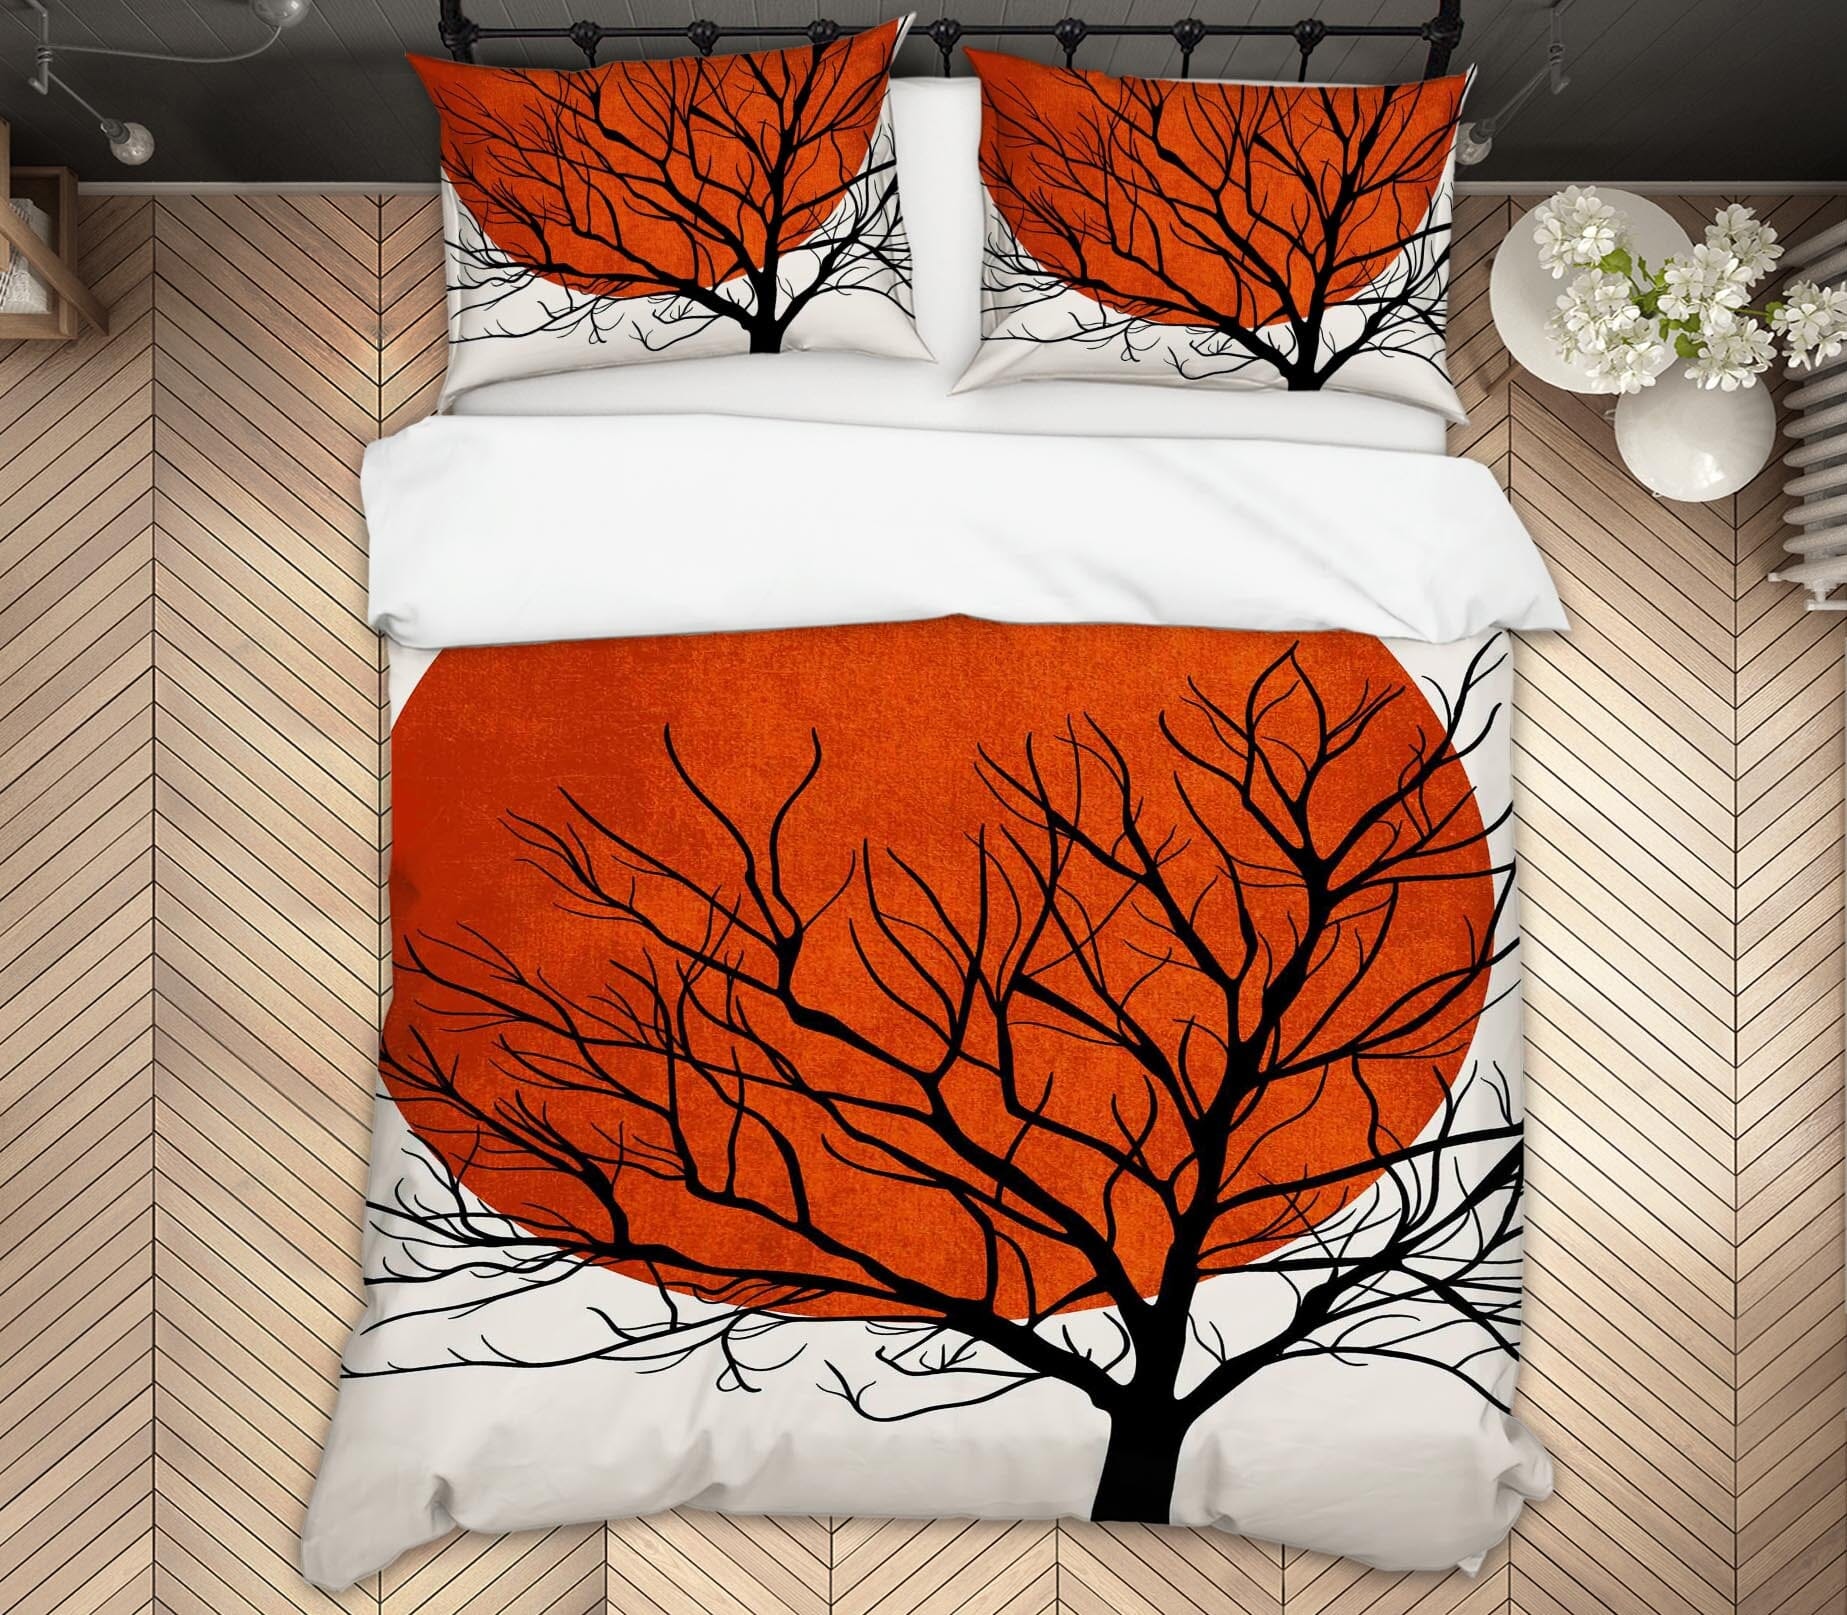 3D Warm Winter 2126 Boris Draschoff Bedding Bed Pillowcases Quilt Quiet Covers AJ Creativity Home 